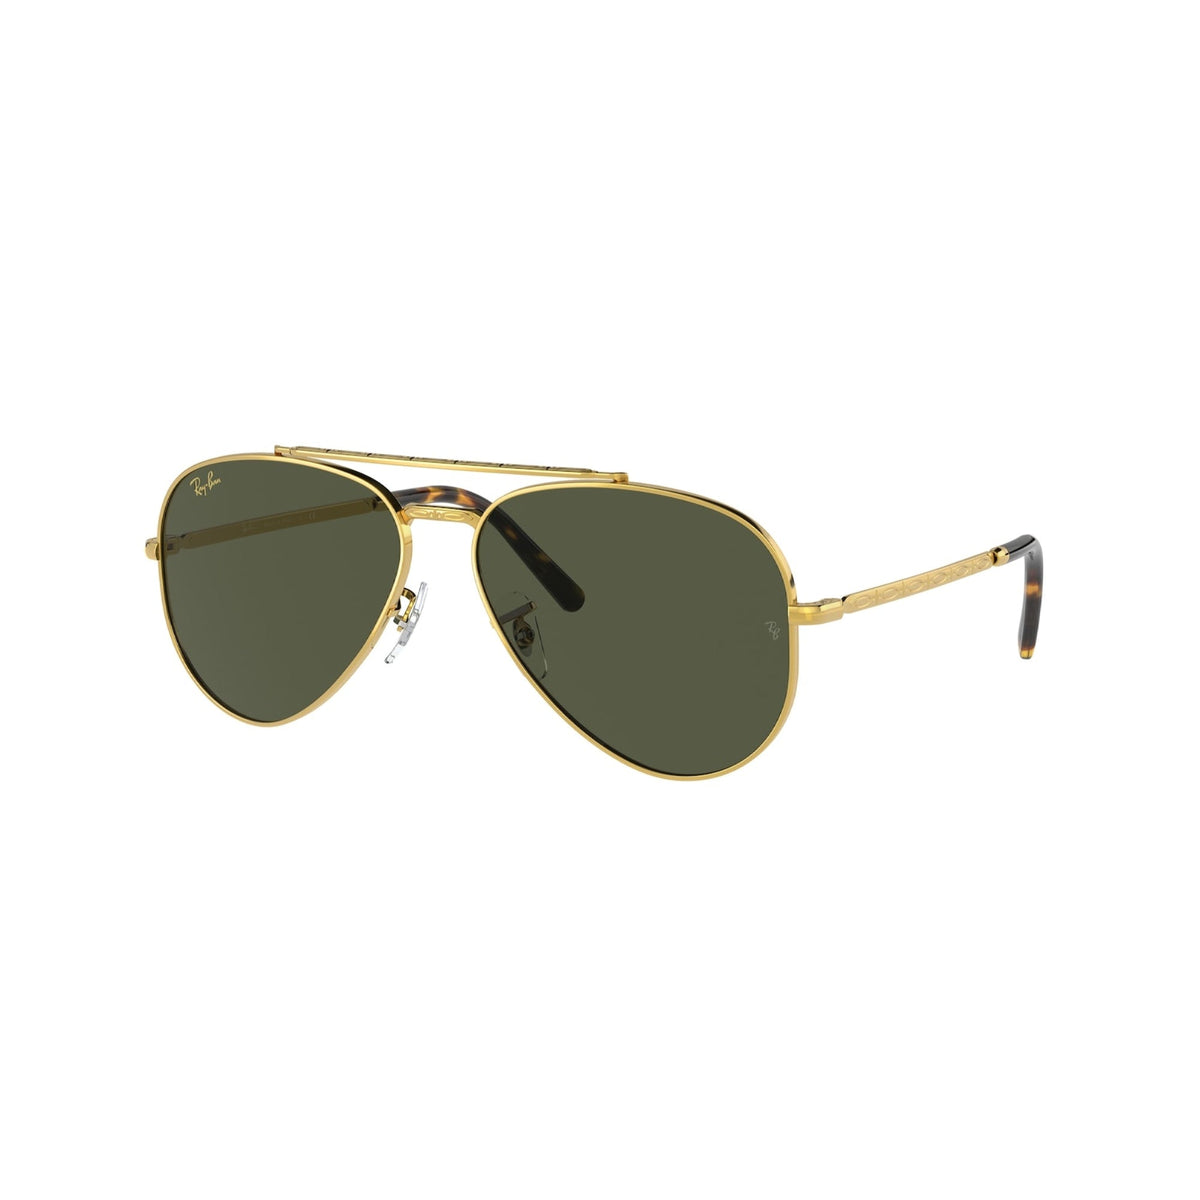 Ray-Ban Unisex Sunglasses New Aviator Gold Green Metal Metal  0RB3625 919631 58